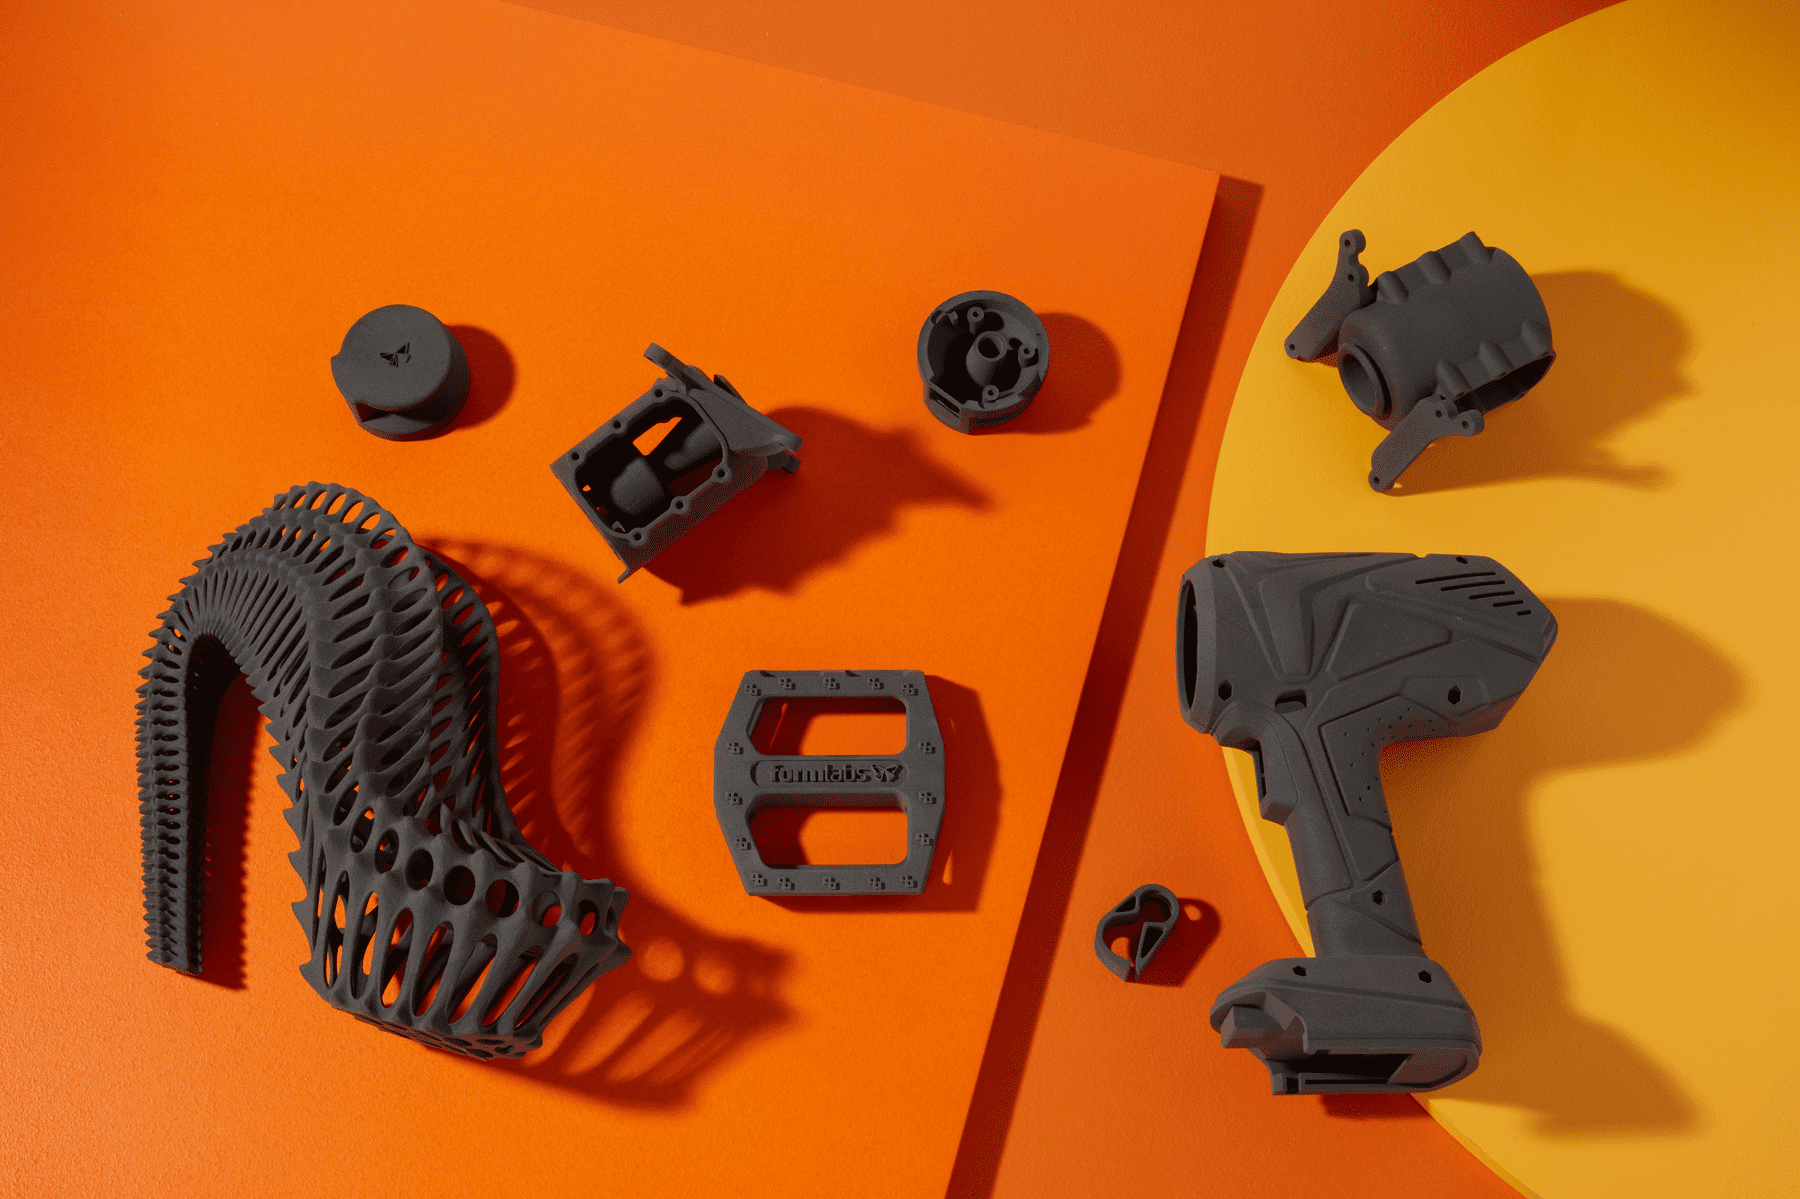 formlabs fuse sls 3D printing materials